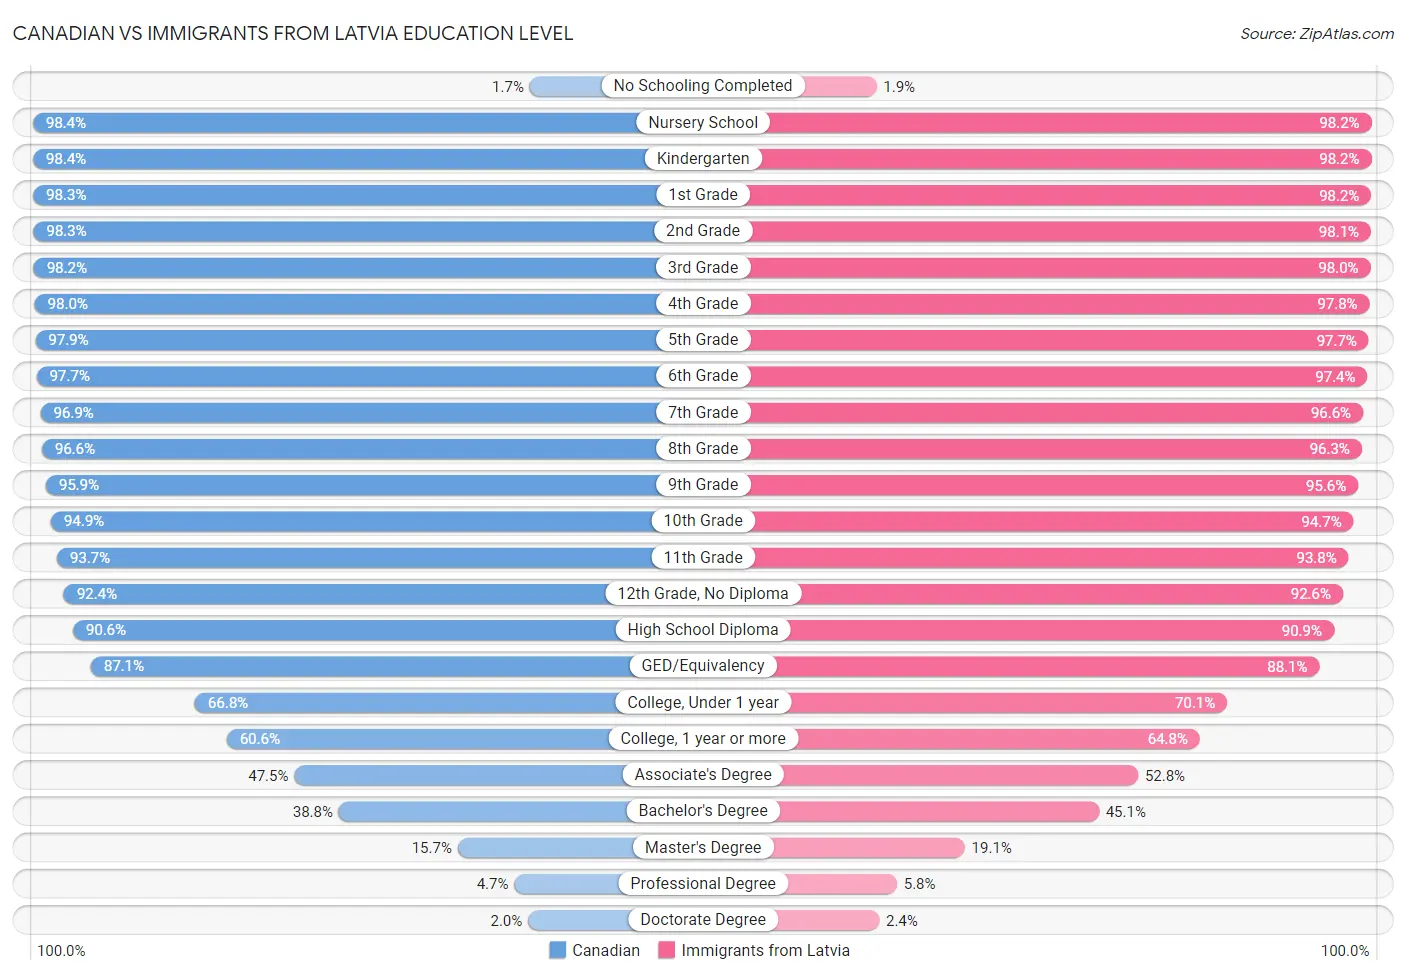 Canadian vs Immigrants from Latvia Education Level